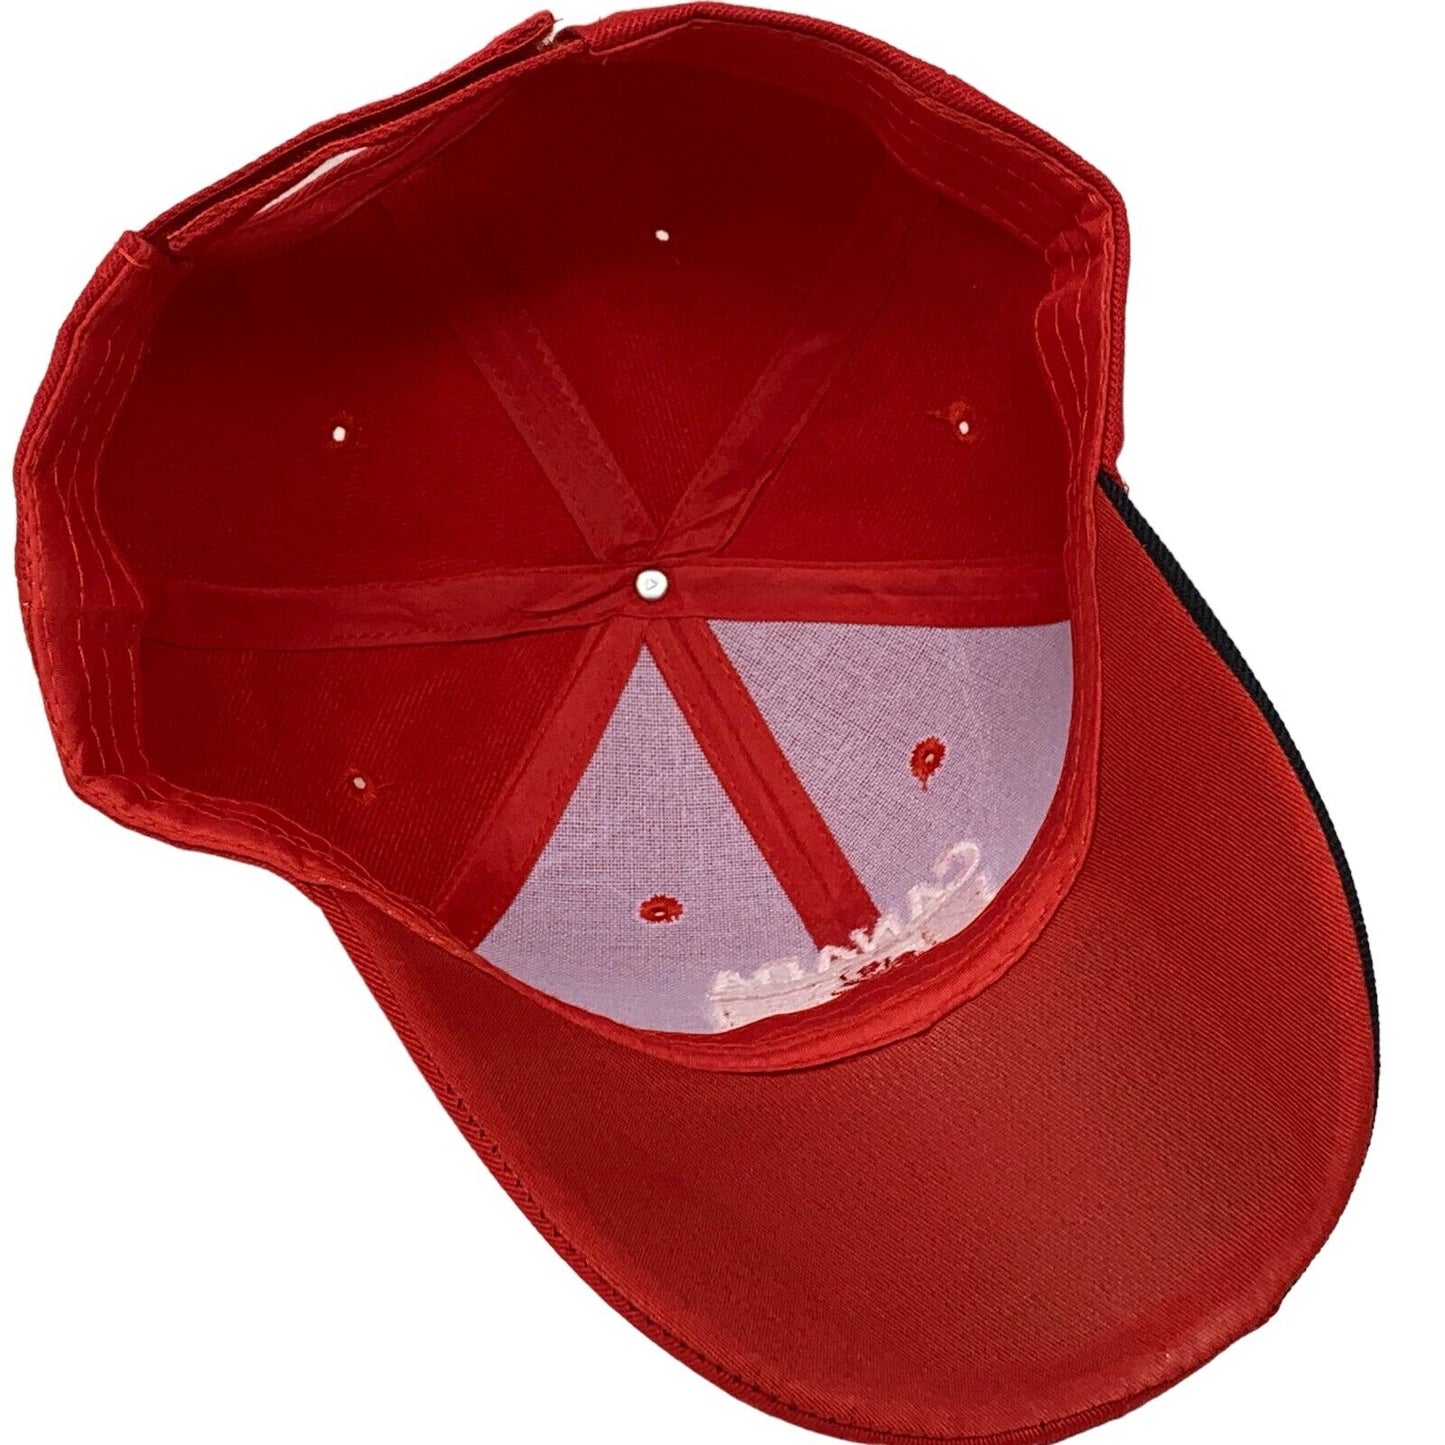 Canada Strapback Hat Canadian Flag Red 6 Six Panel Baseball Cap